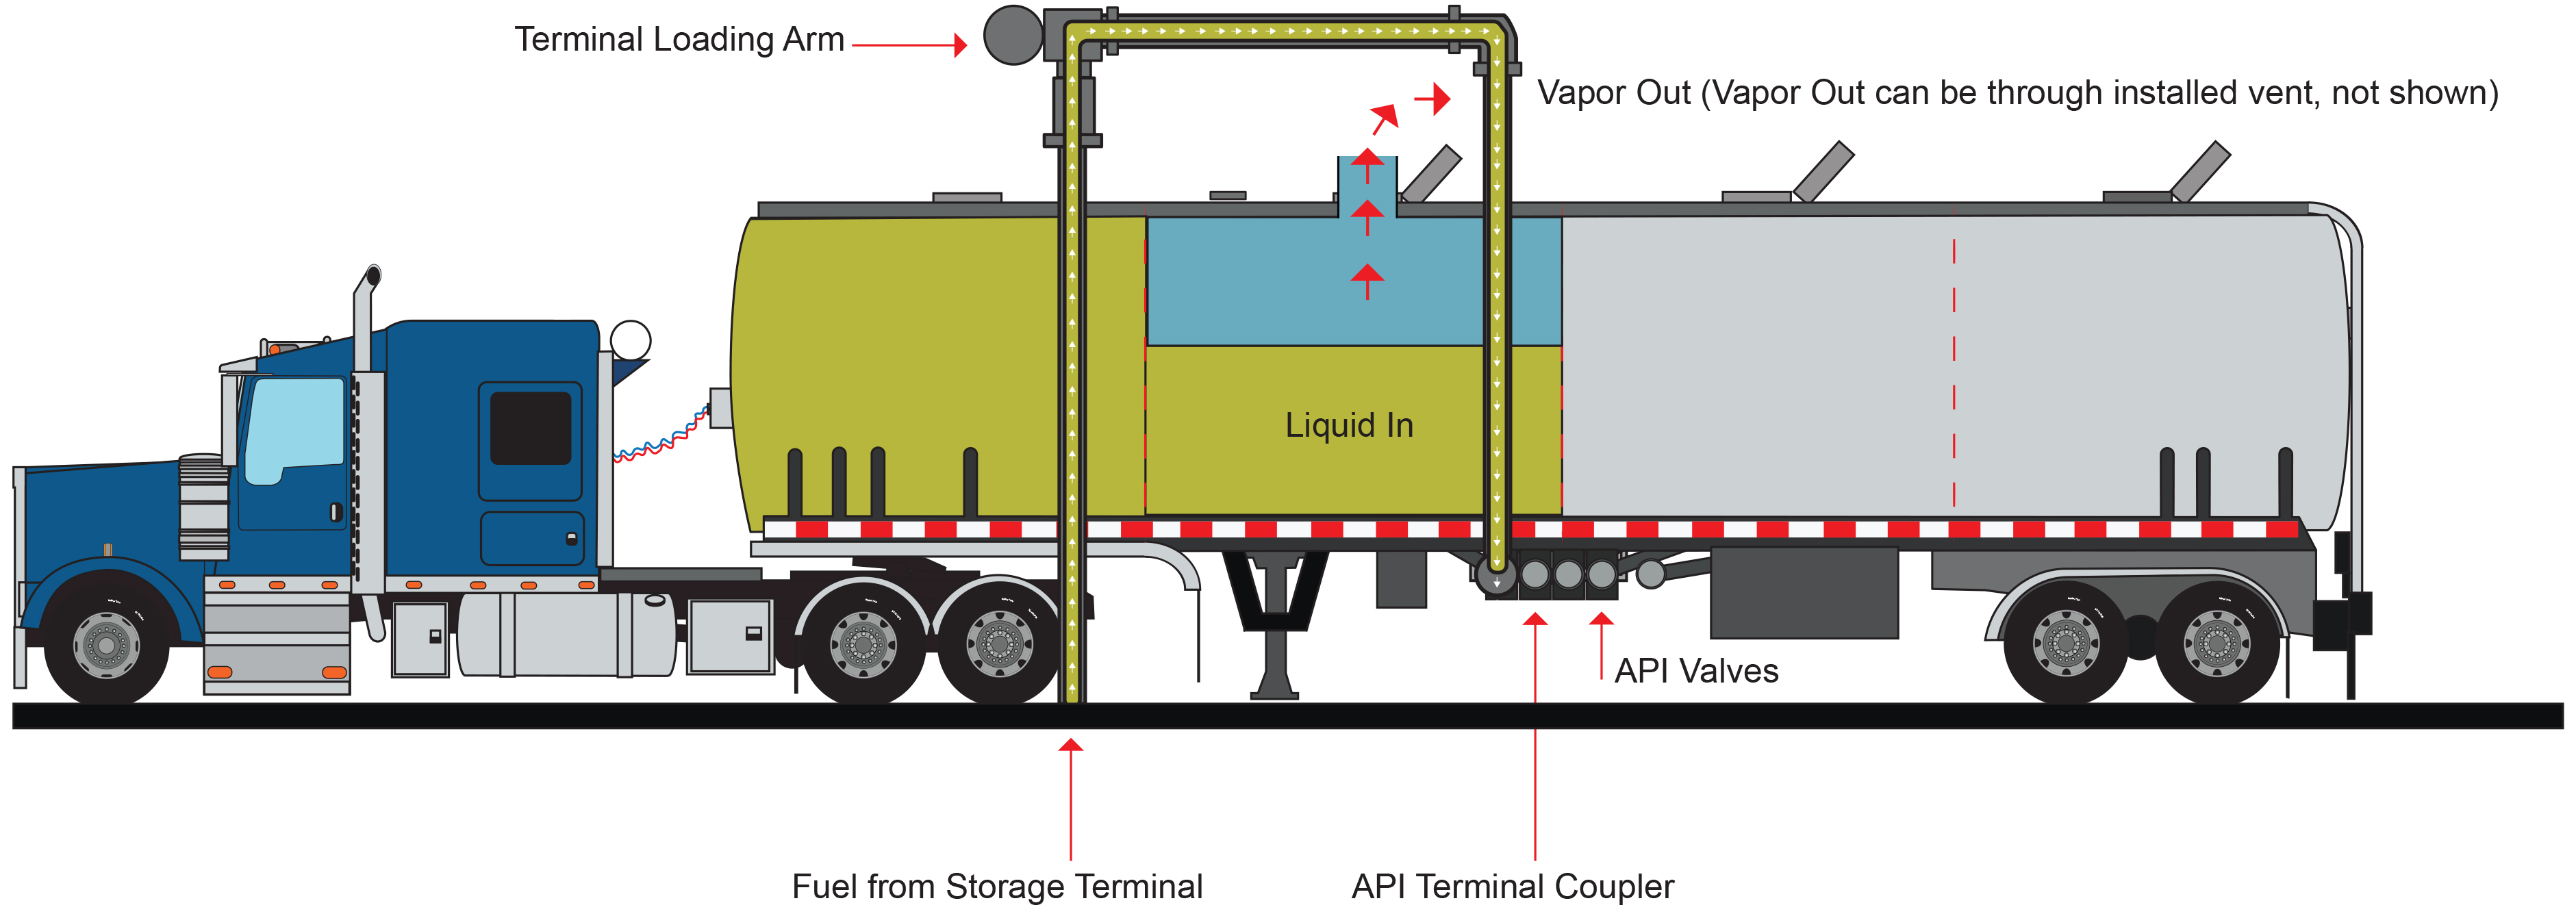 petroleum tank truck bottom loading at terminal_no vapor recovery